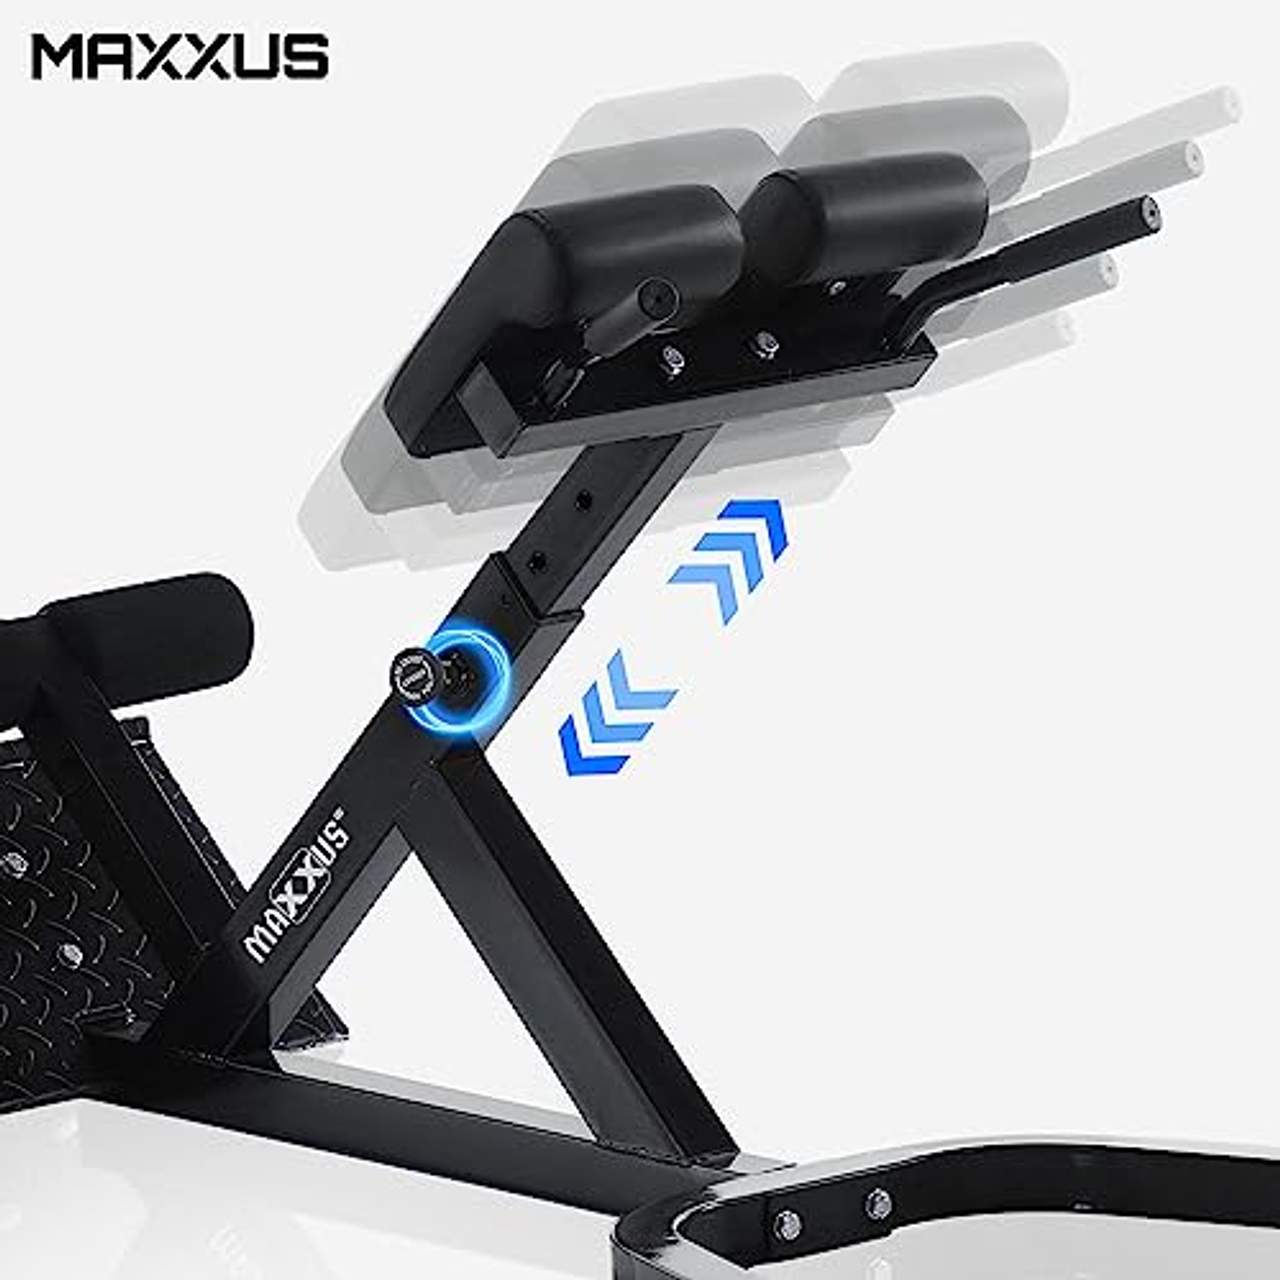 Maxxus Hyperextension Rückentrainer